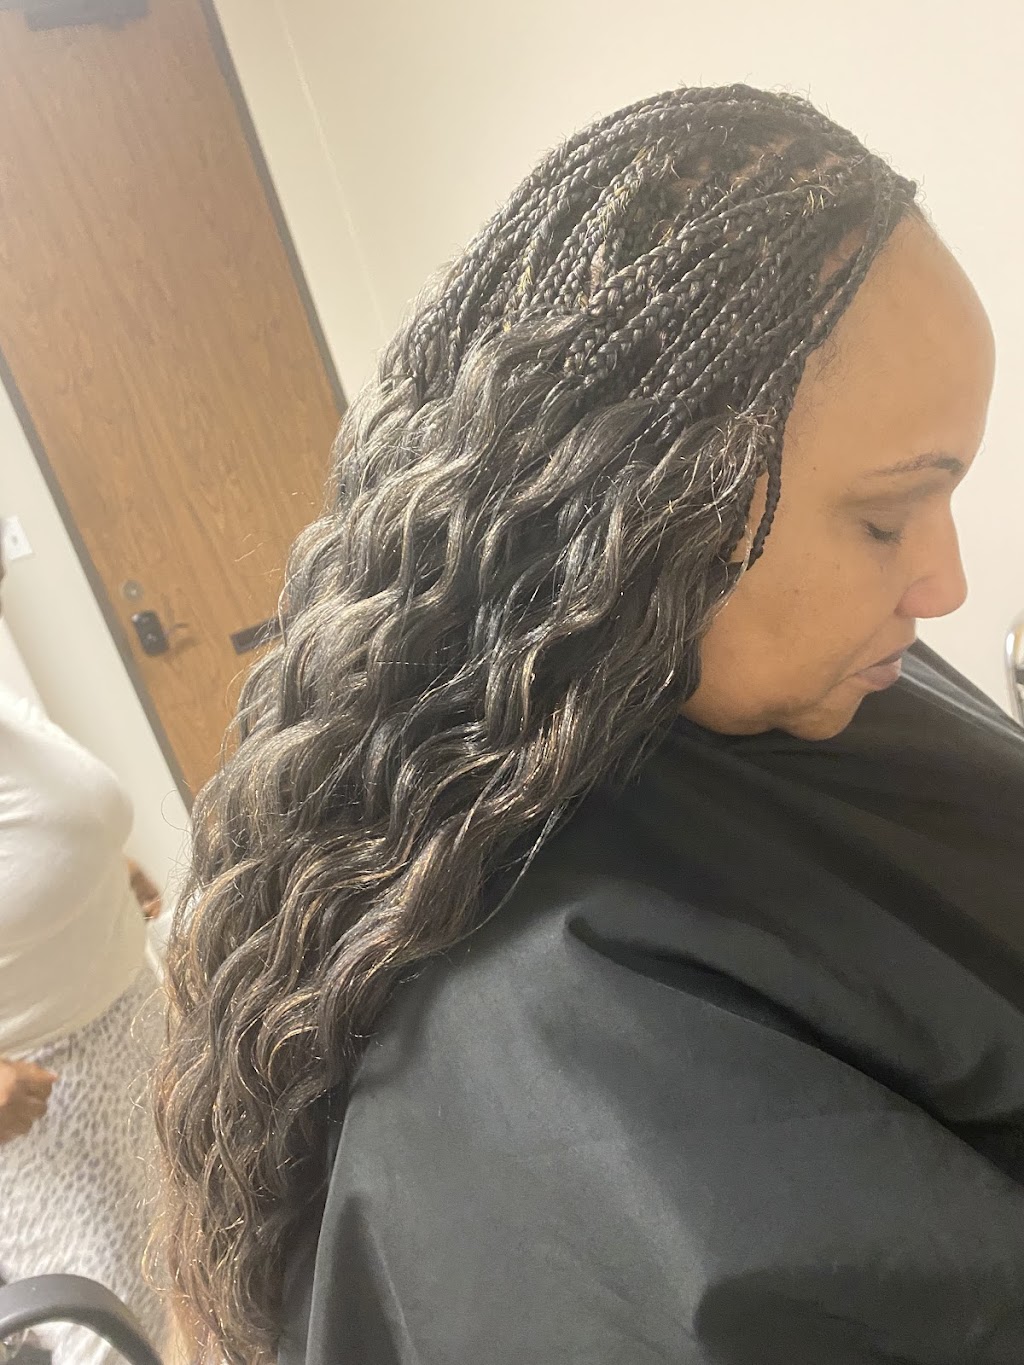 Braids By Sunrise African Hair Braiding-Houston | 5222 Cypress Creek Pkwy Suite 100F, Houston, TX 77069 | Phone: (281) 967-6580